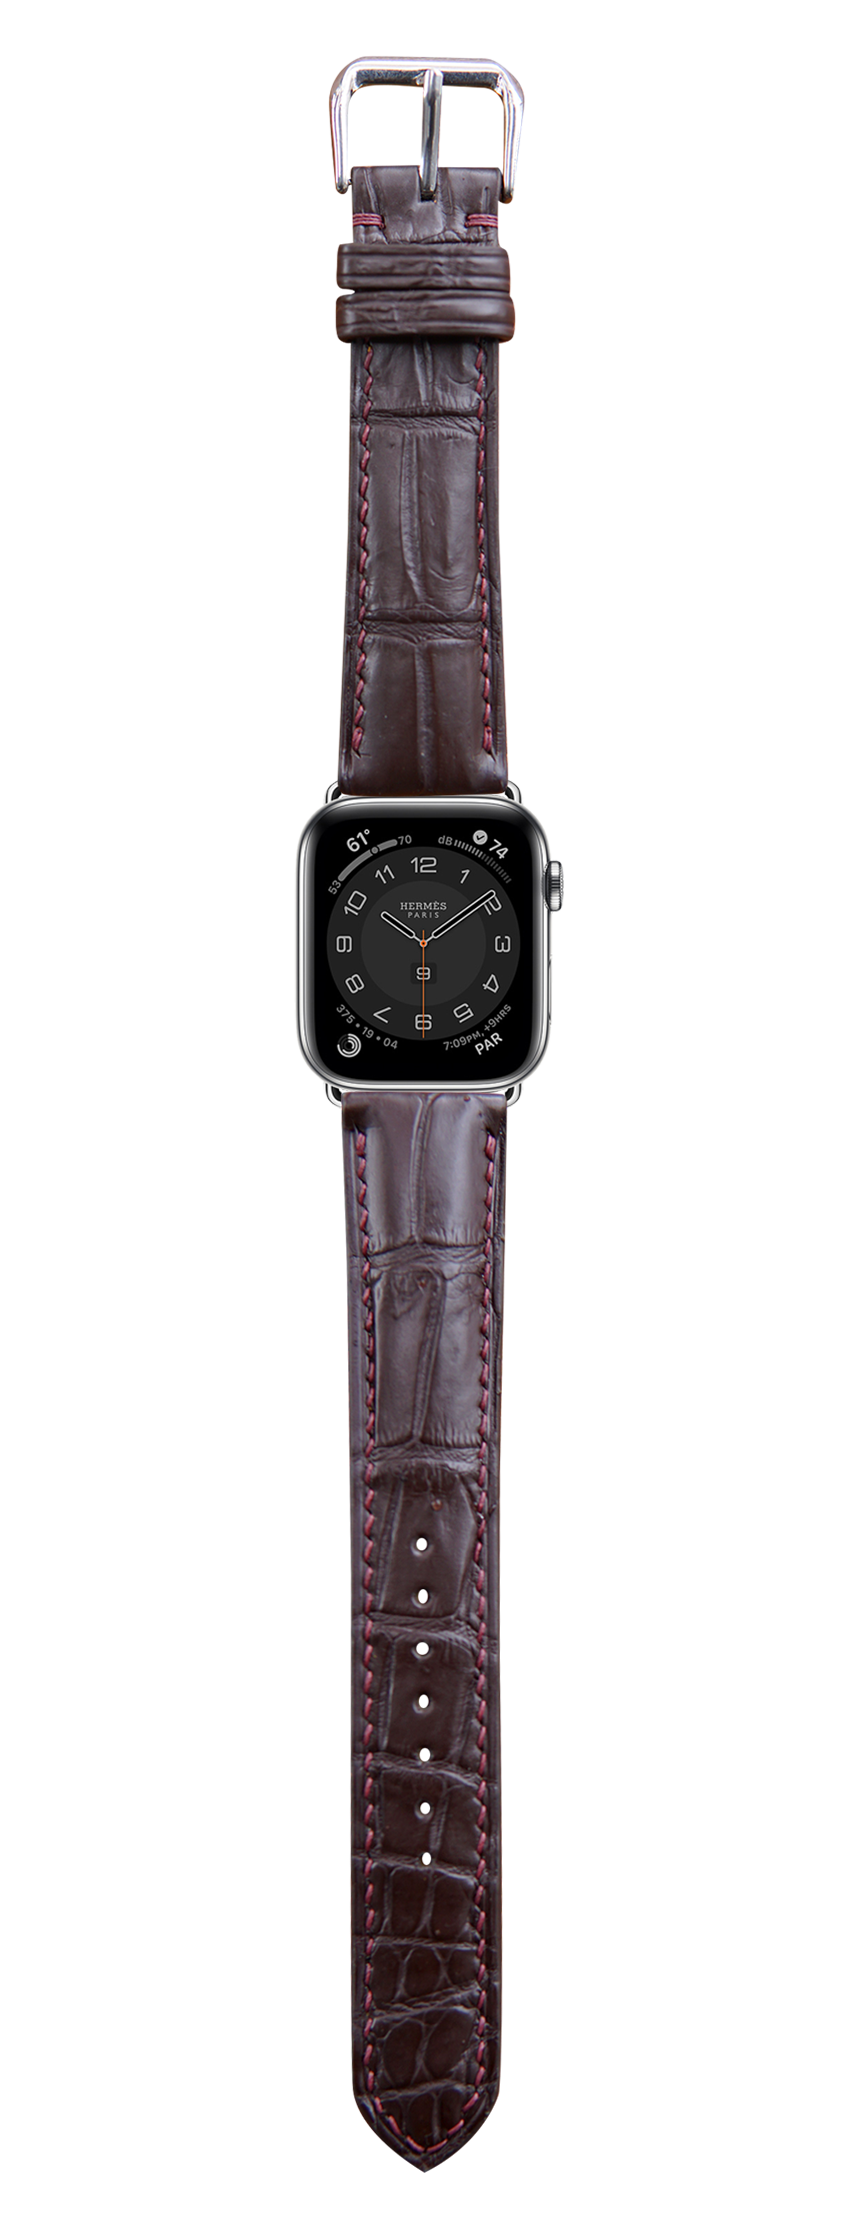 Crocodile Leather Apple Watch Strap - Brown